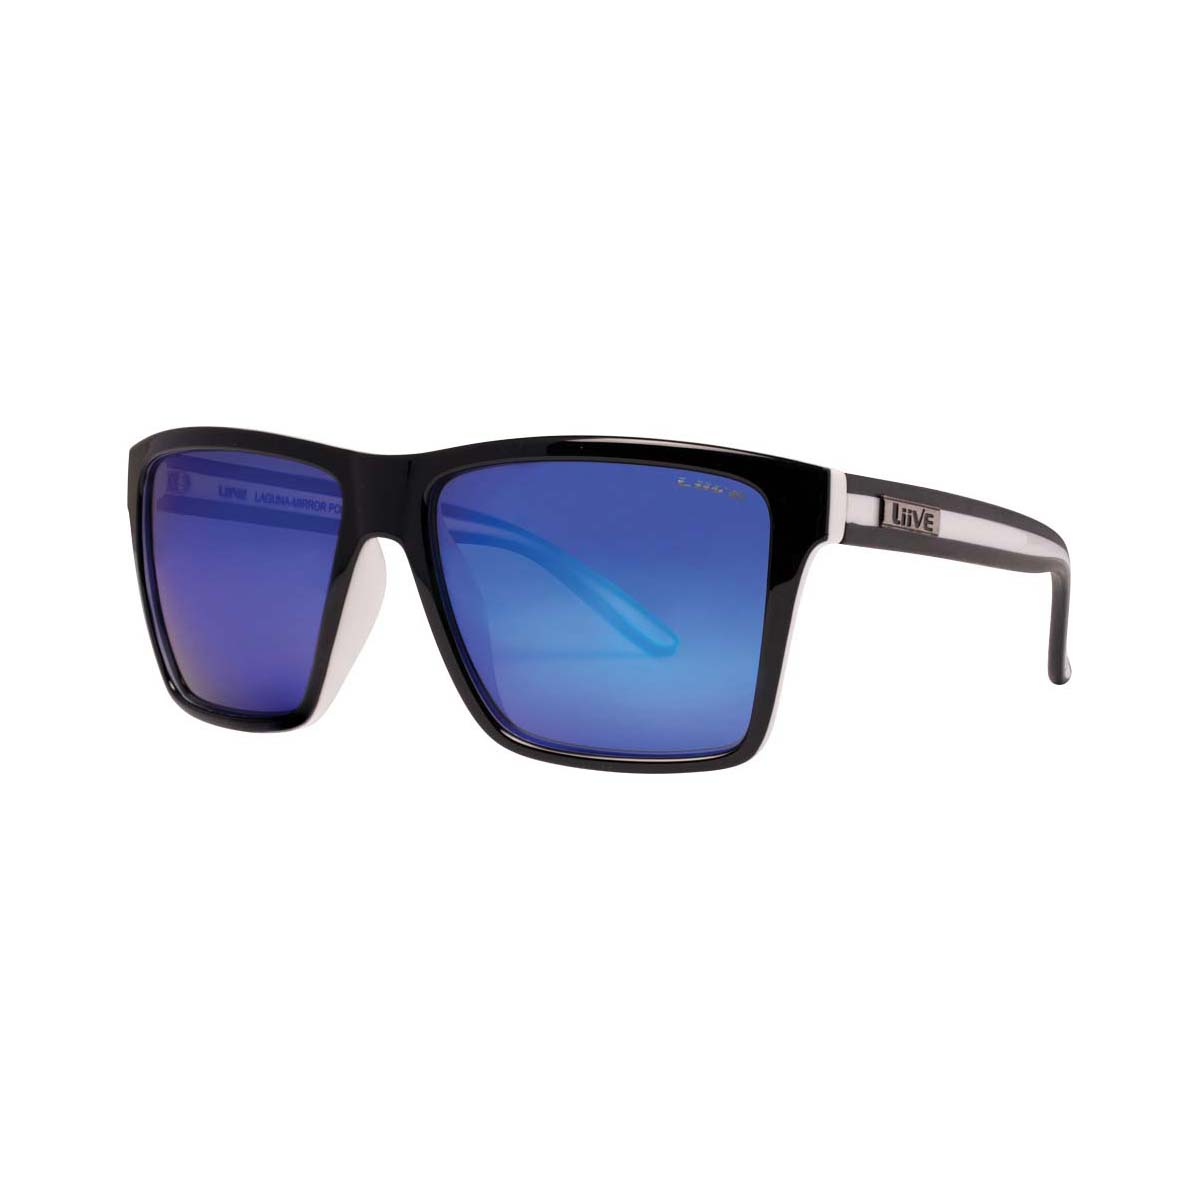 Liive Vision Men's Laguna Sunglasses